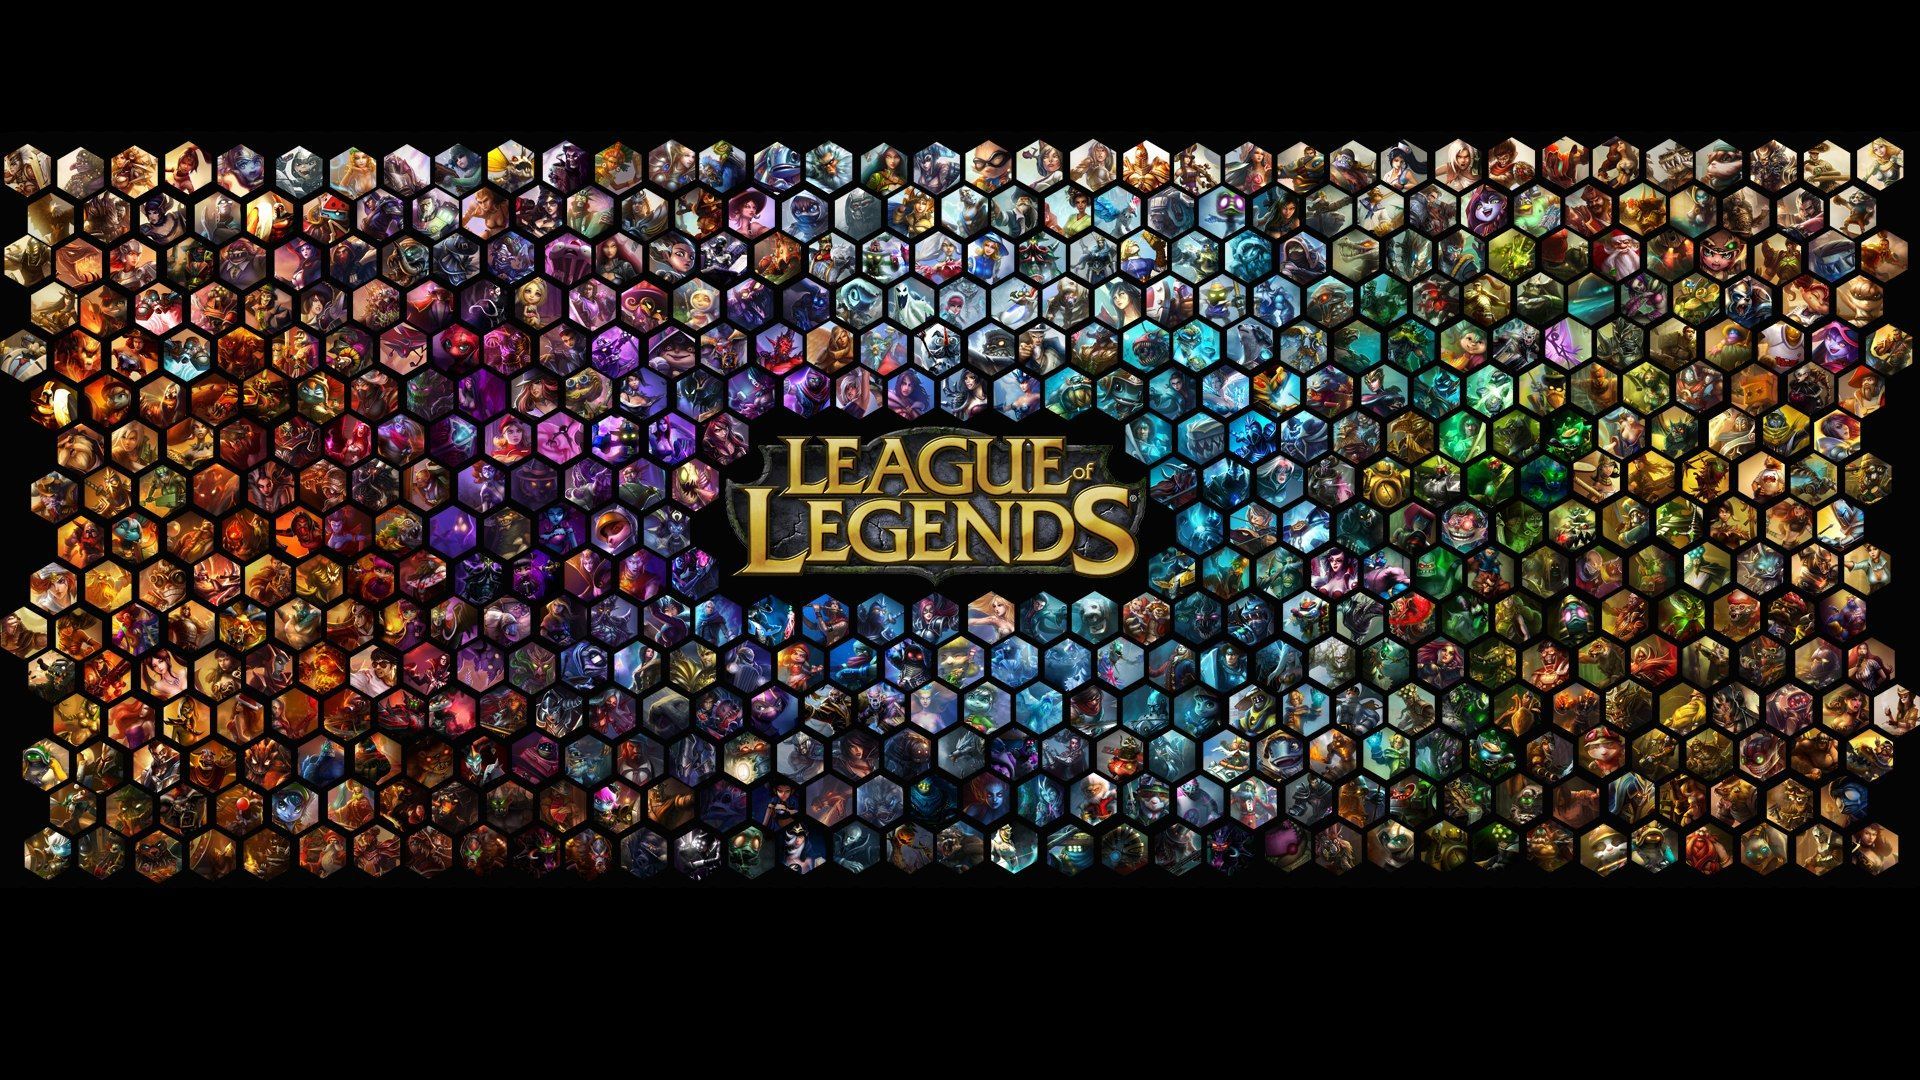 League of legends wallpaper 1920x1080 - - High Quality